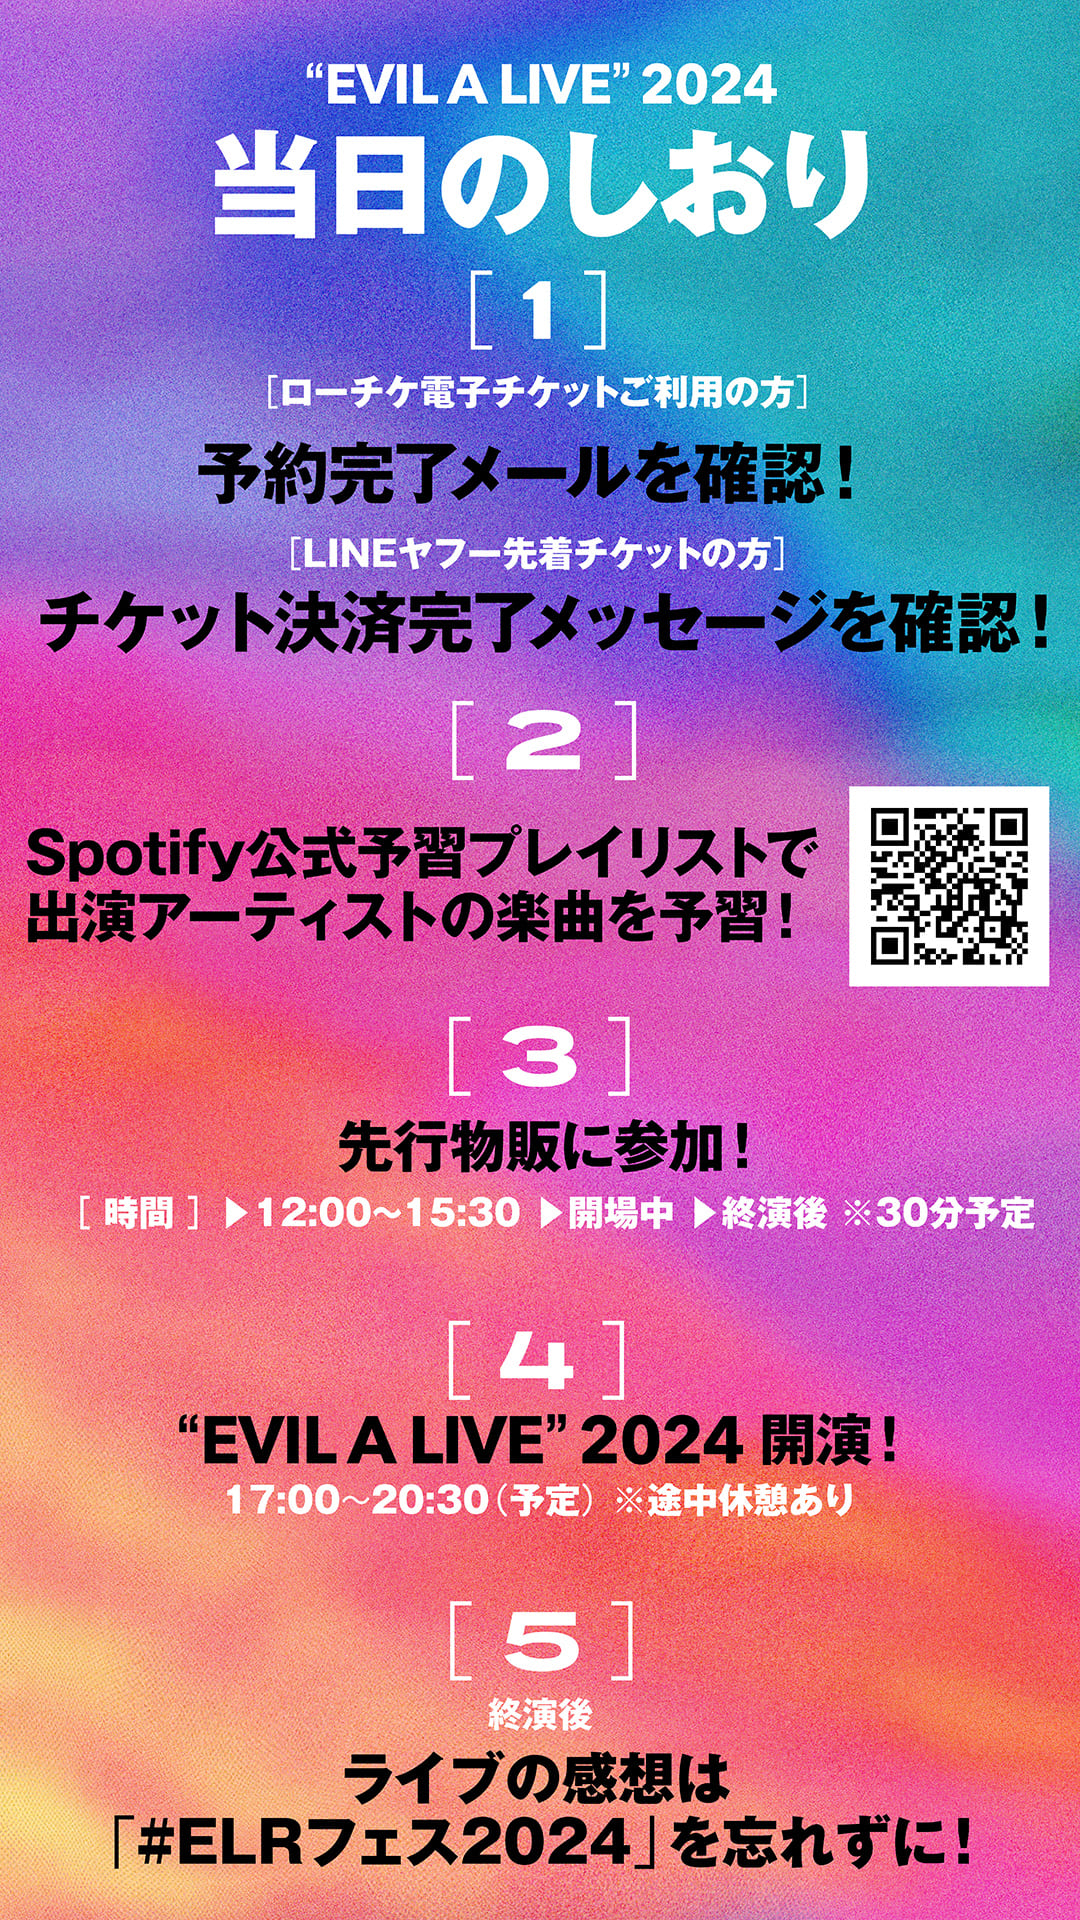 FES GUIDE＞<br>5/4(土) EVIL LINE RECORDS 10th Anniversary FES 